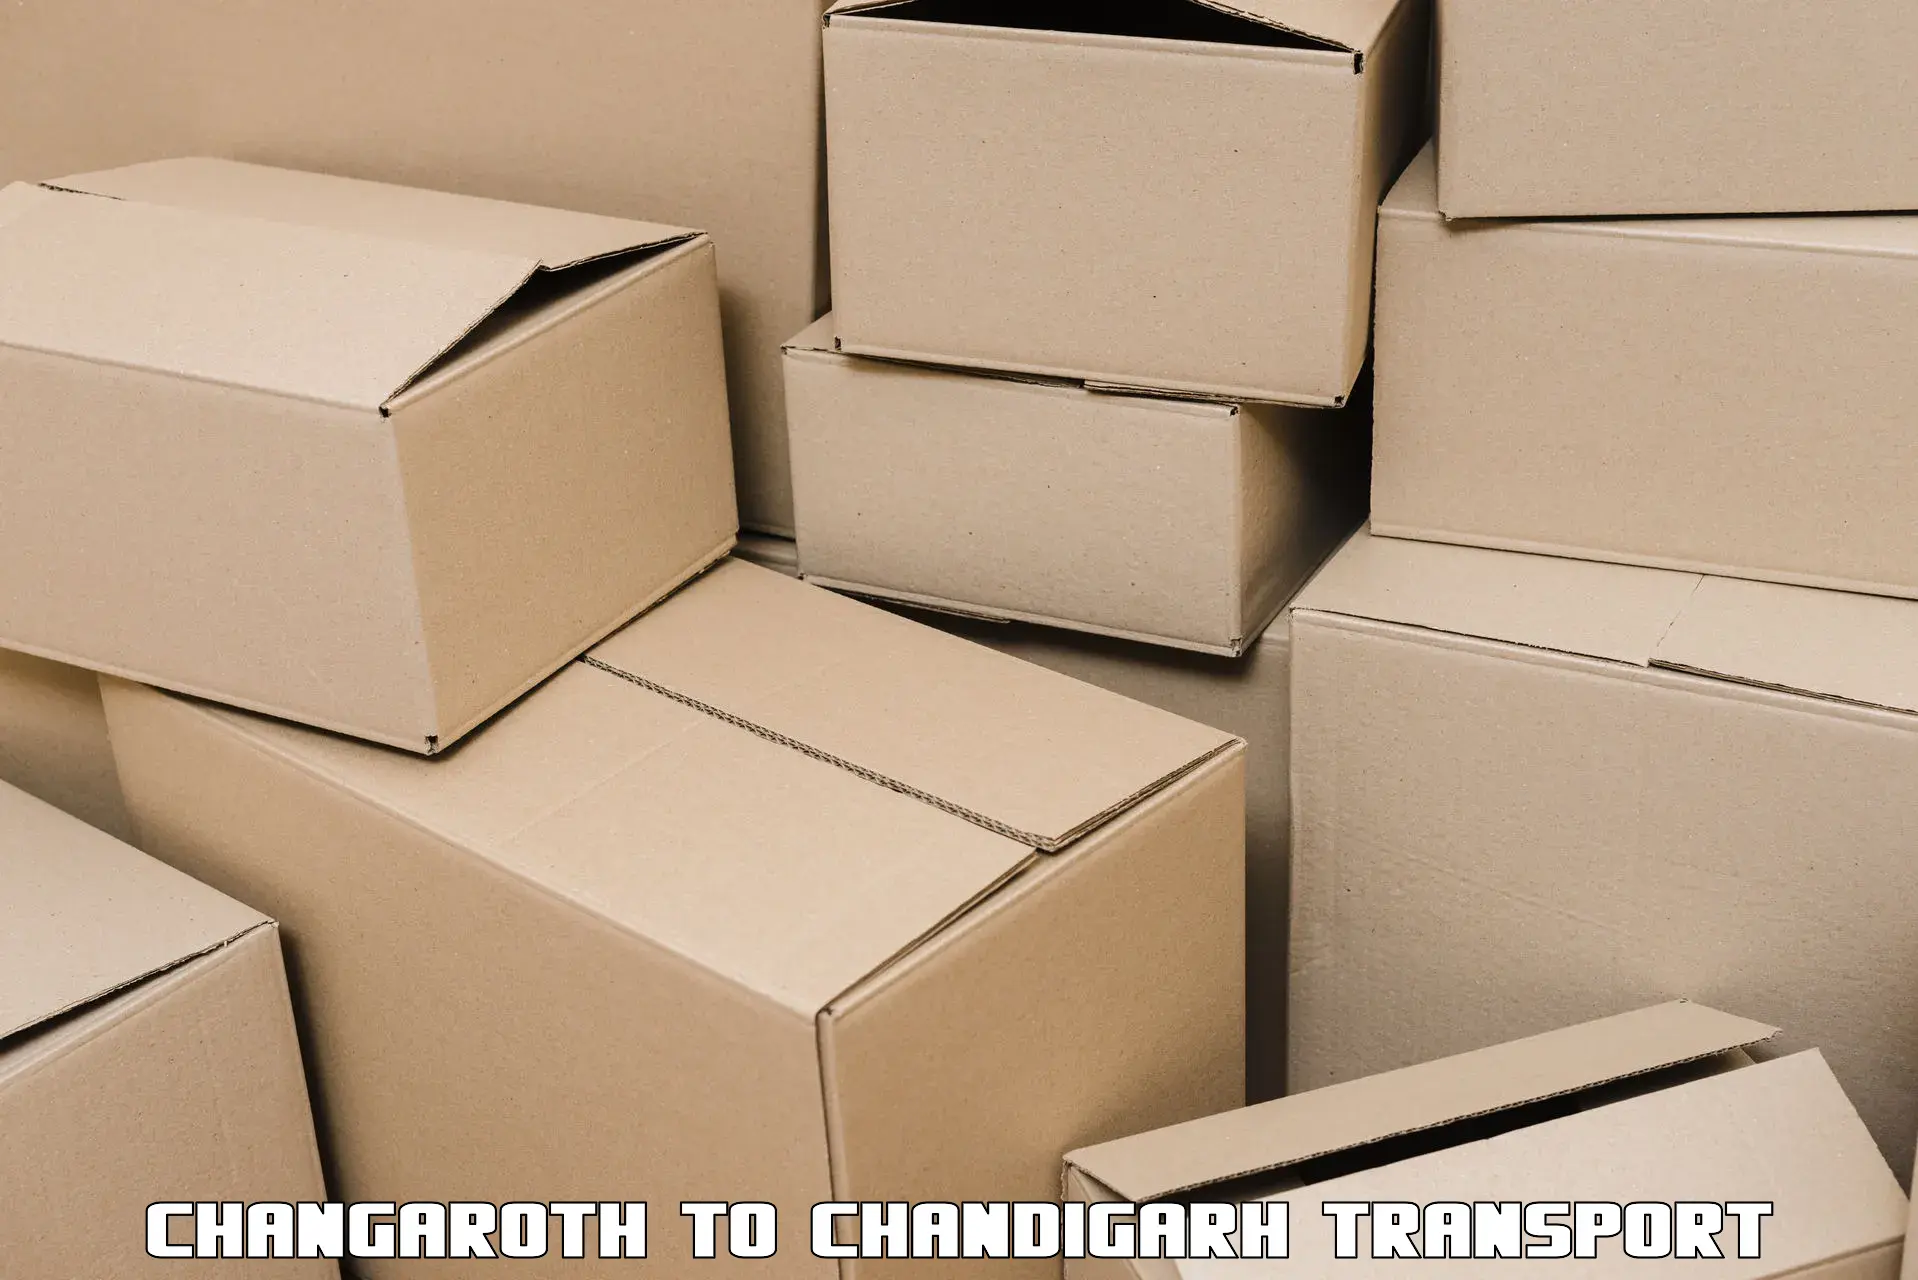 Pick up transport service Changaroth to Chandigarh